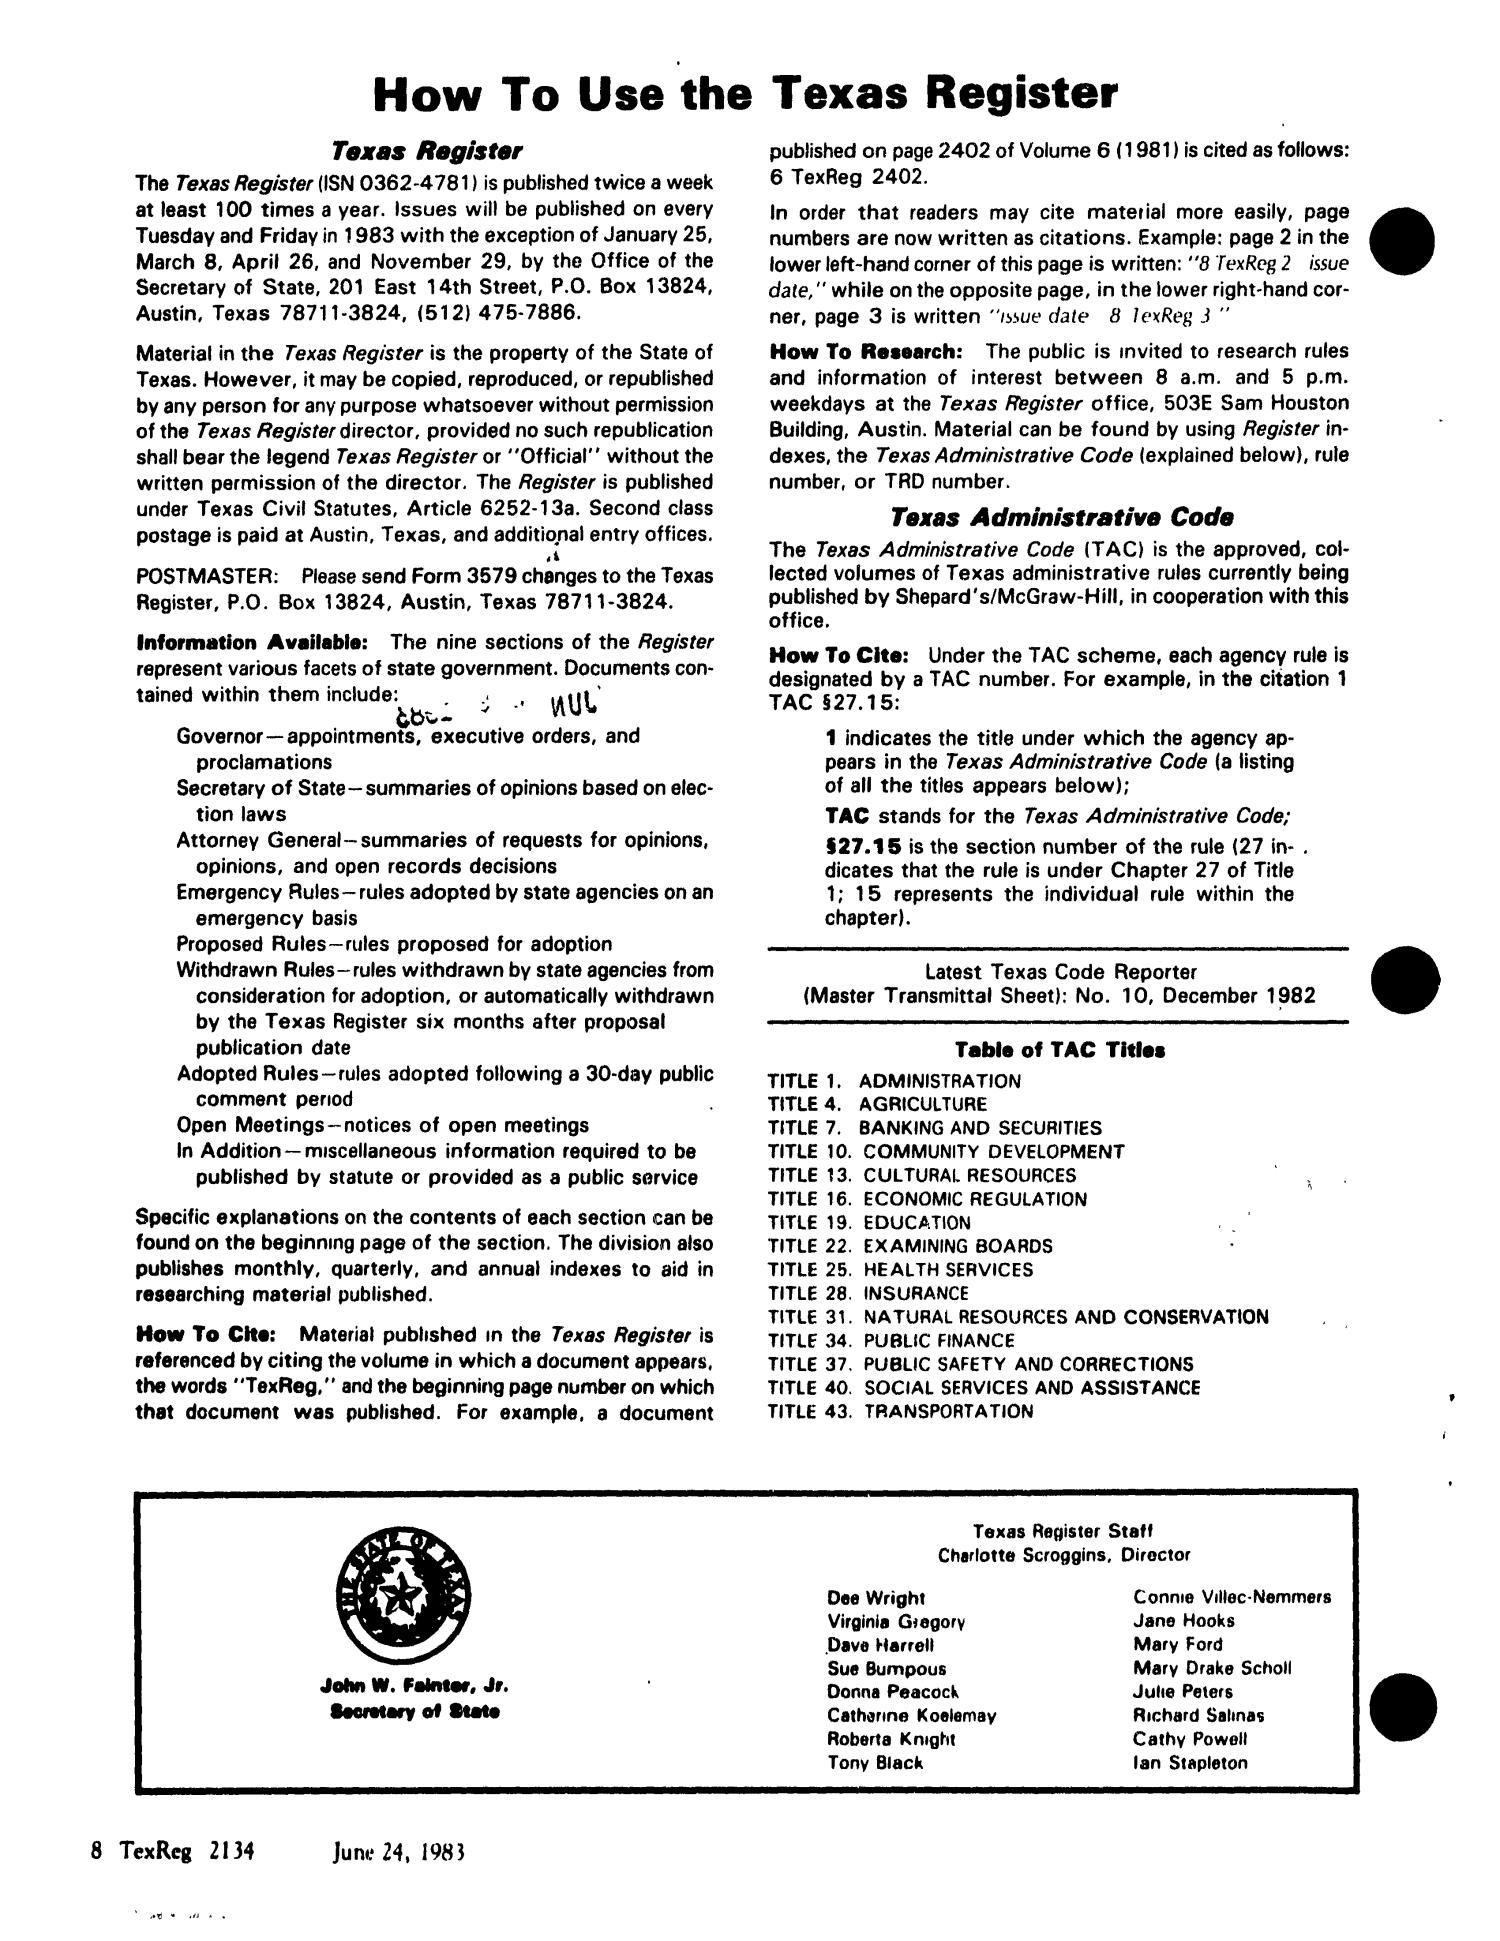 Texas Register, Volume 8, Number 45, Pages 2133-2236, June 24, 1983
                                                
                                                    2134
                                                